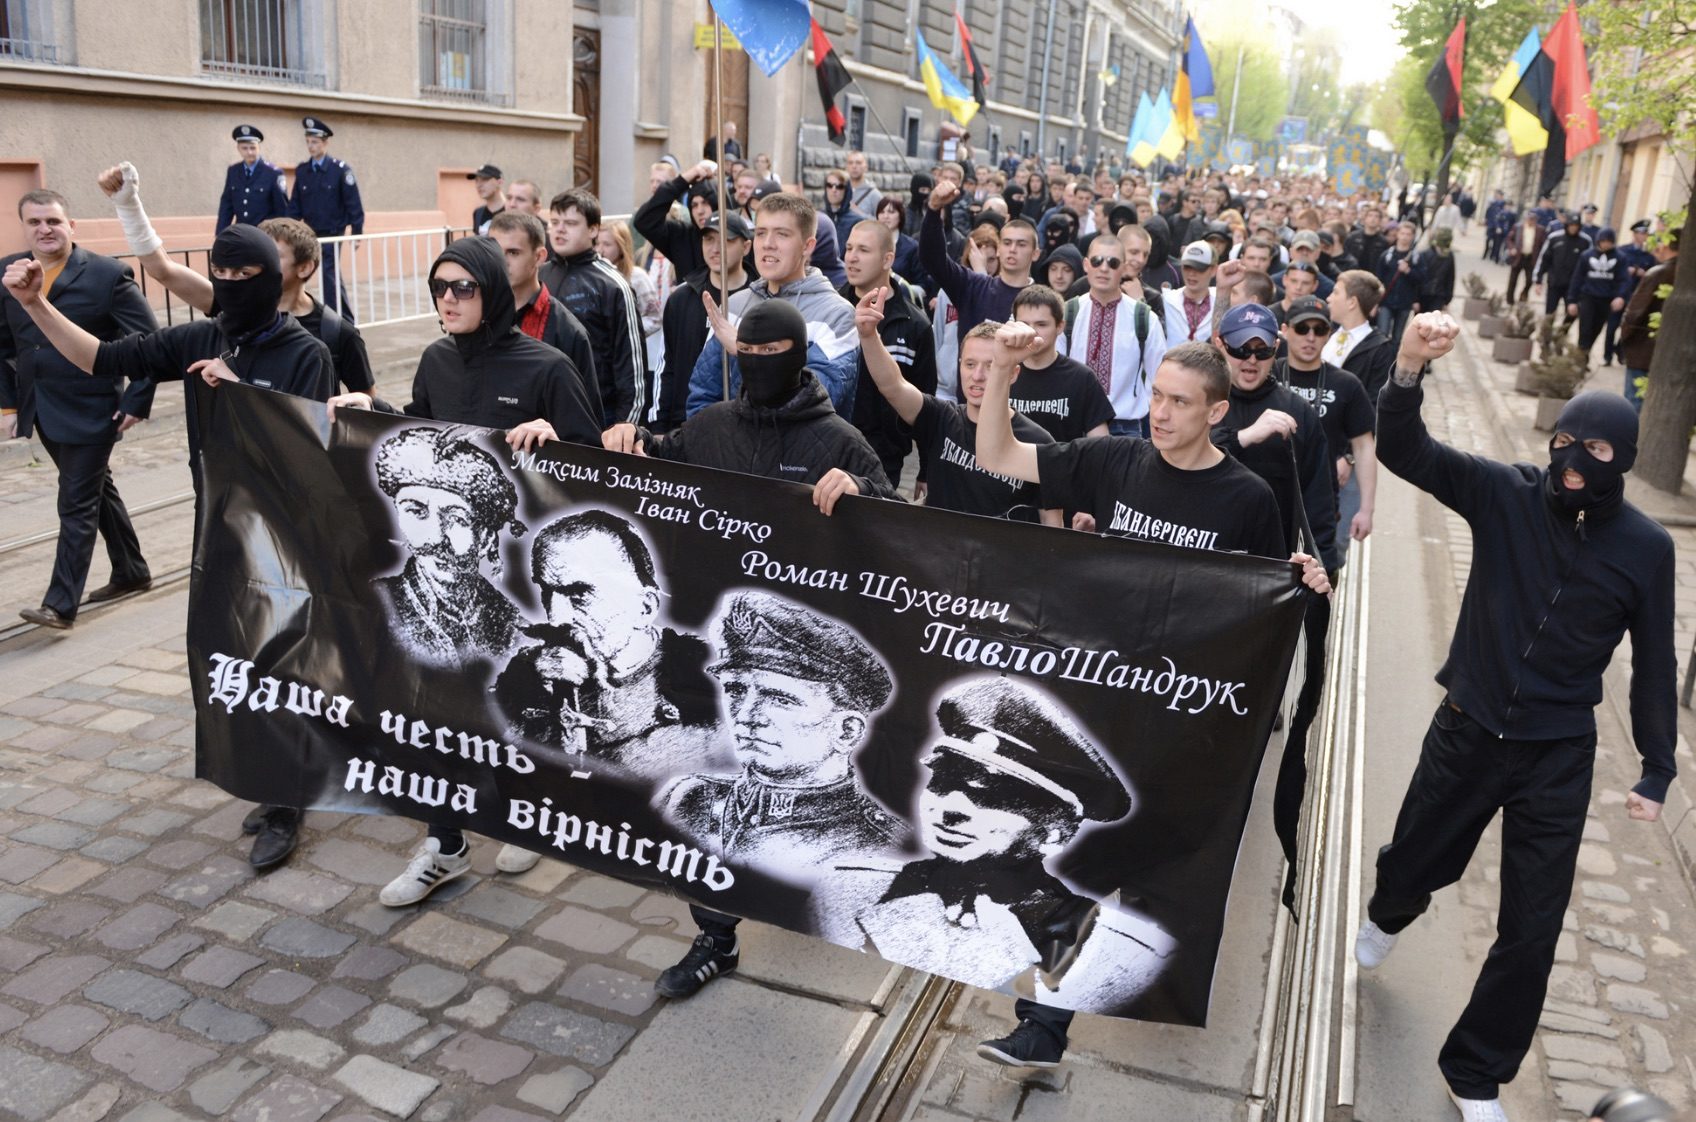 Ukrainian ultra-nationalists